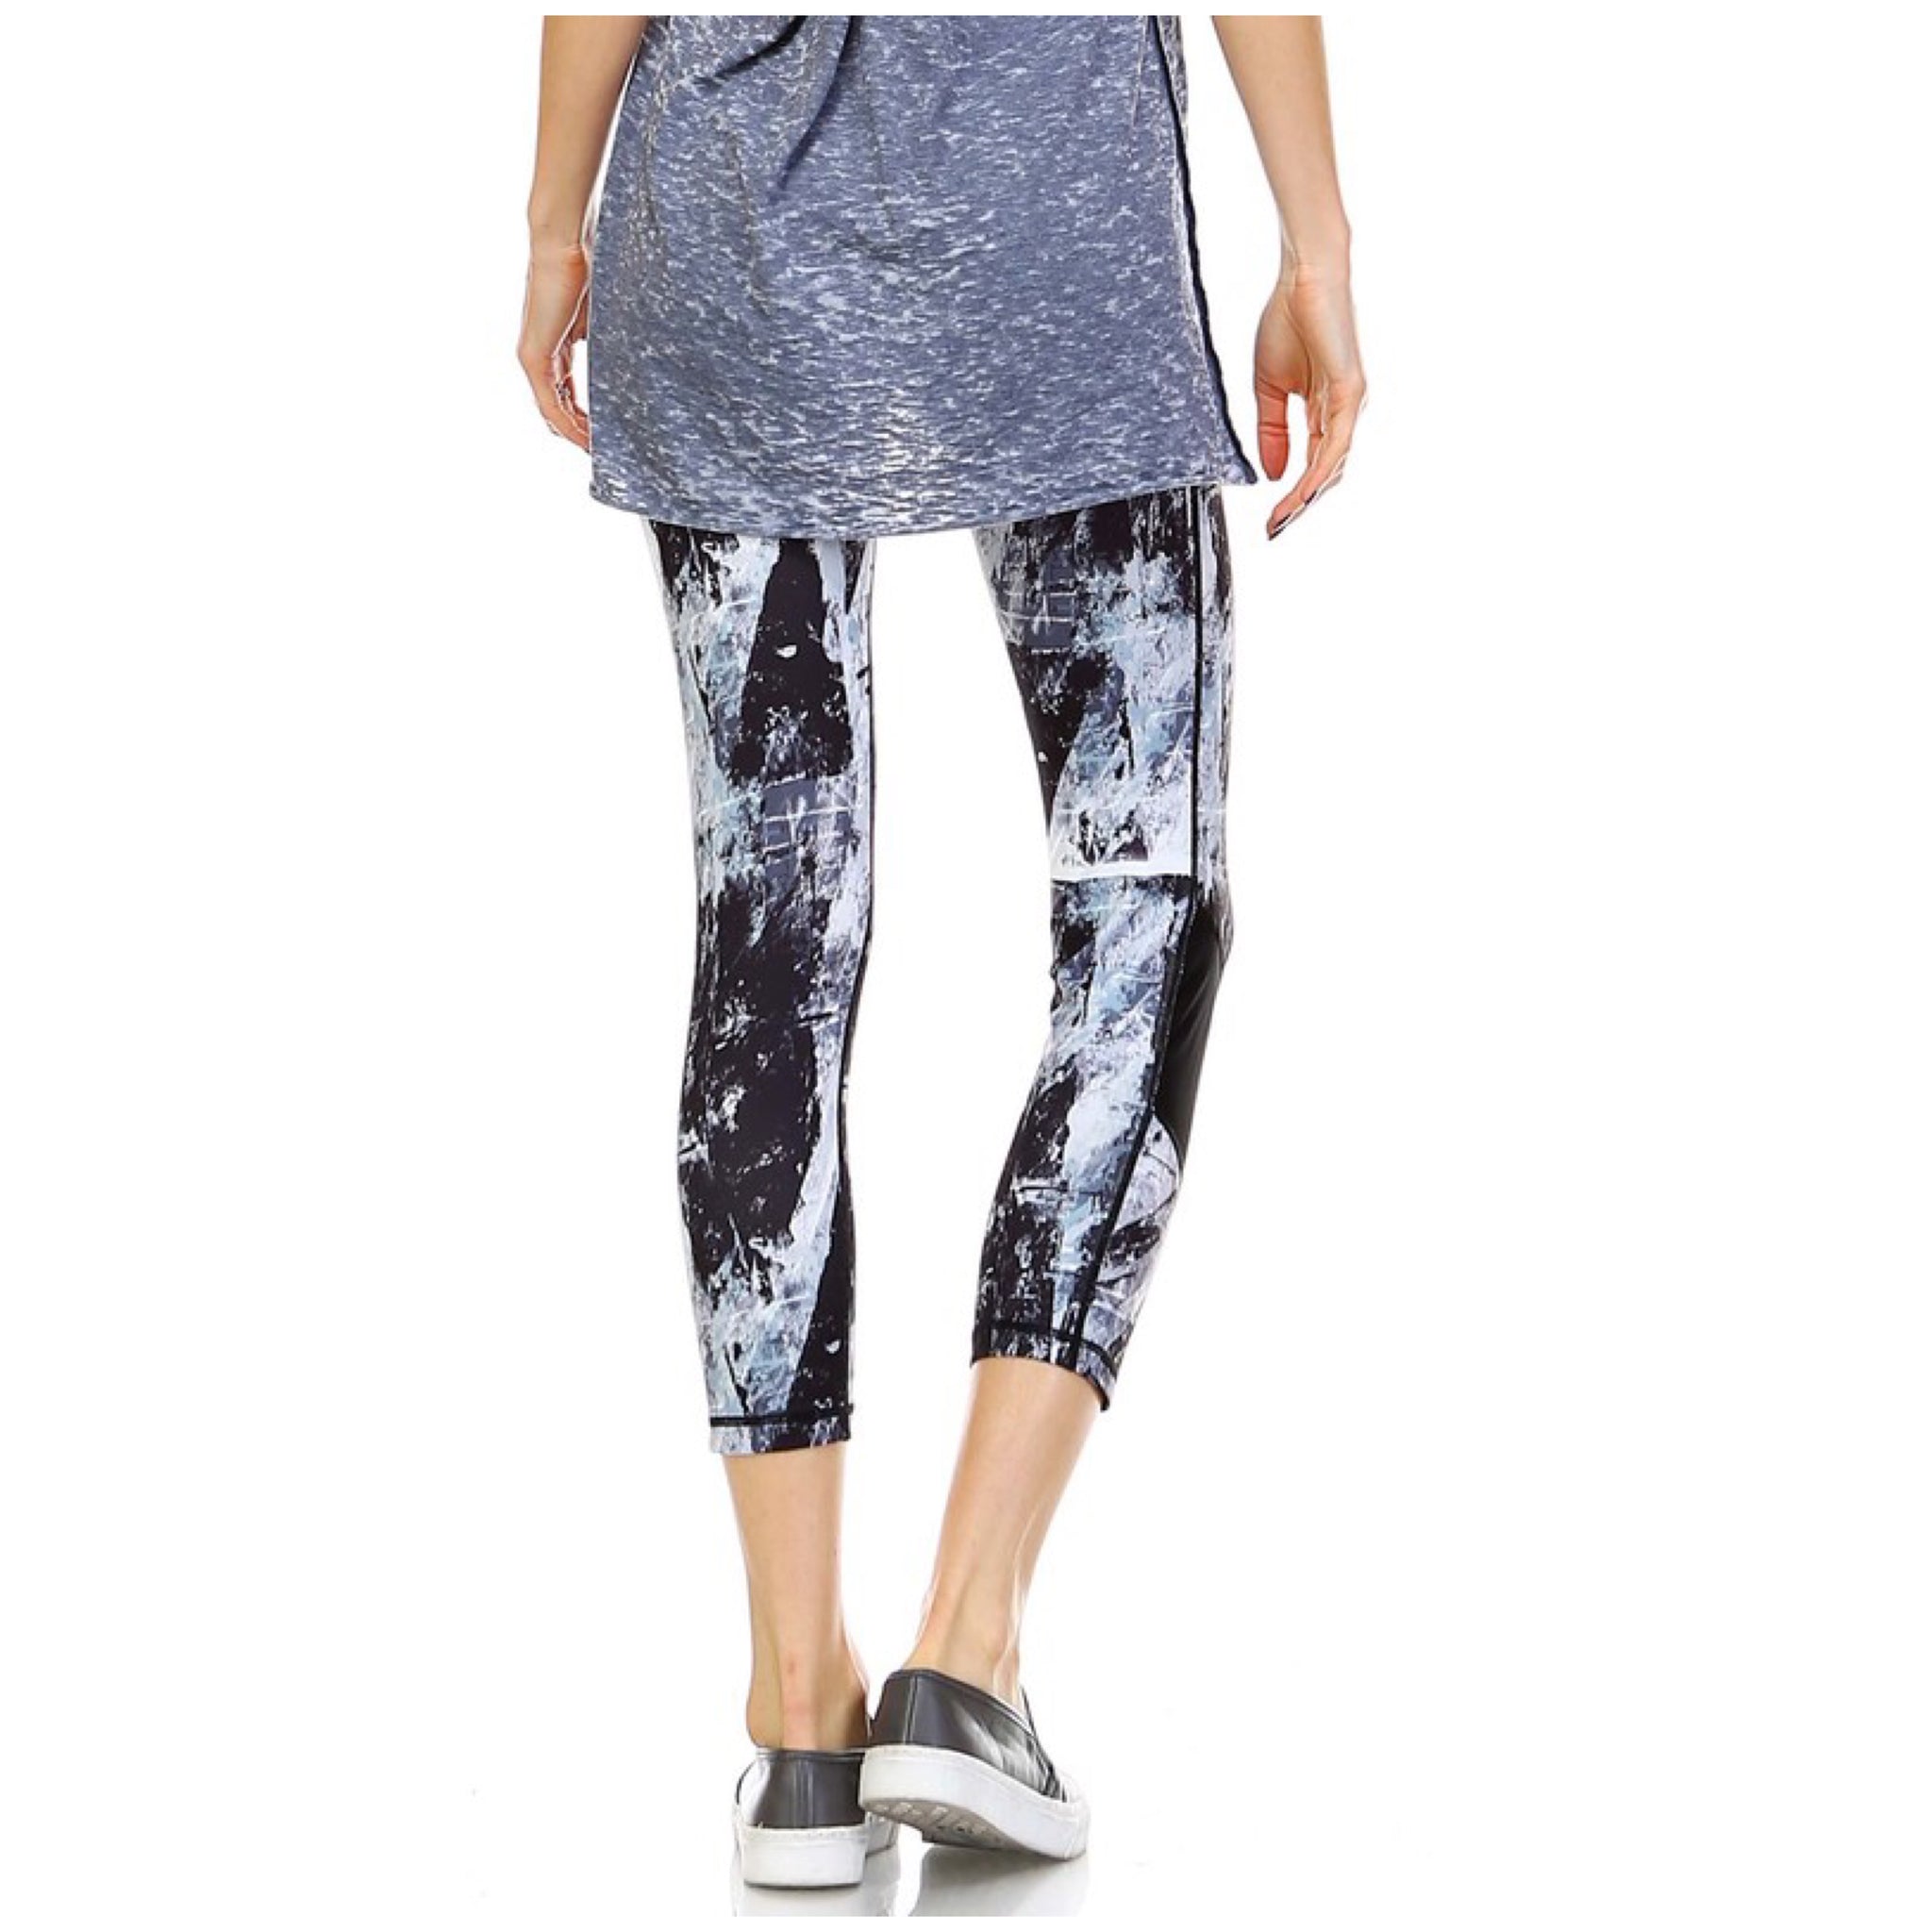 Paint Print Leggings Stretch Yoga Lounge Capri Pants Gym Workout Black Blue S/M/L